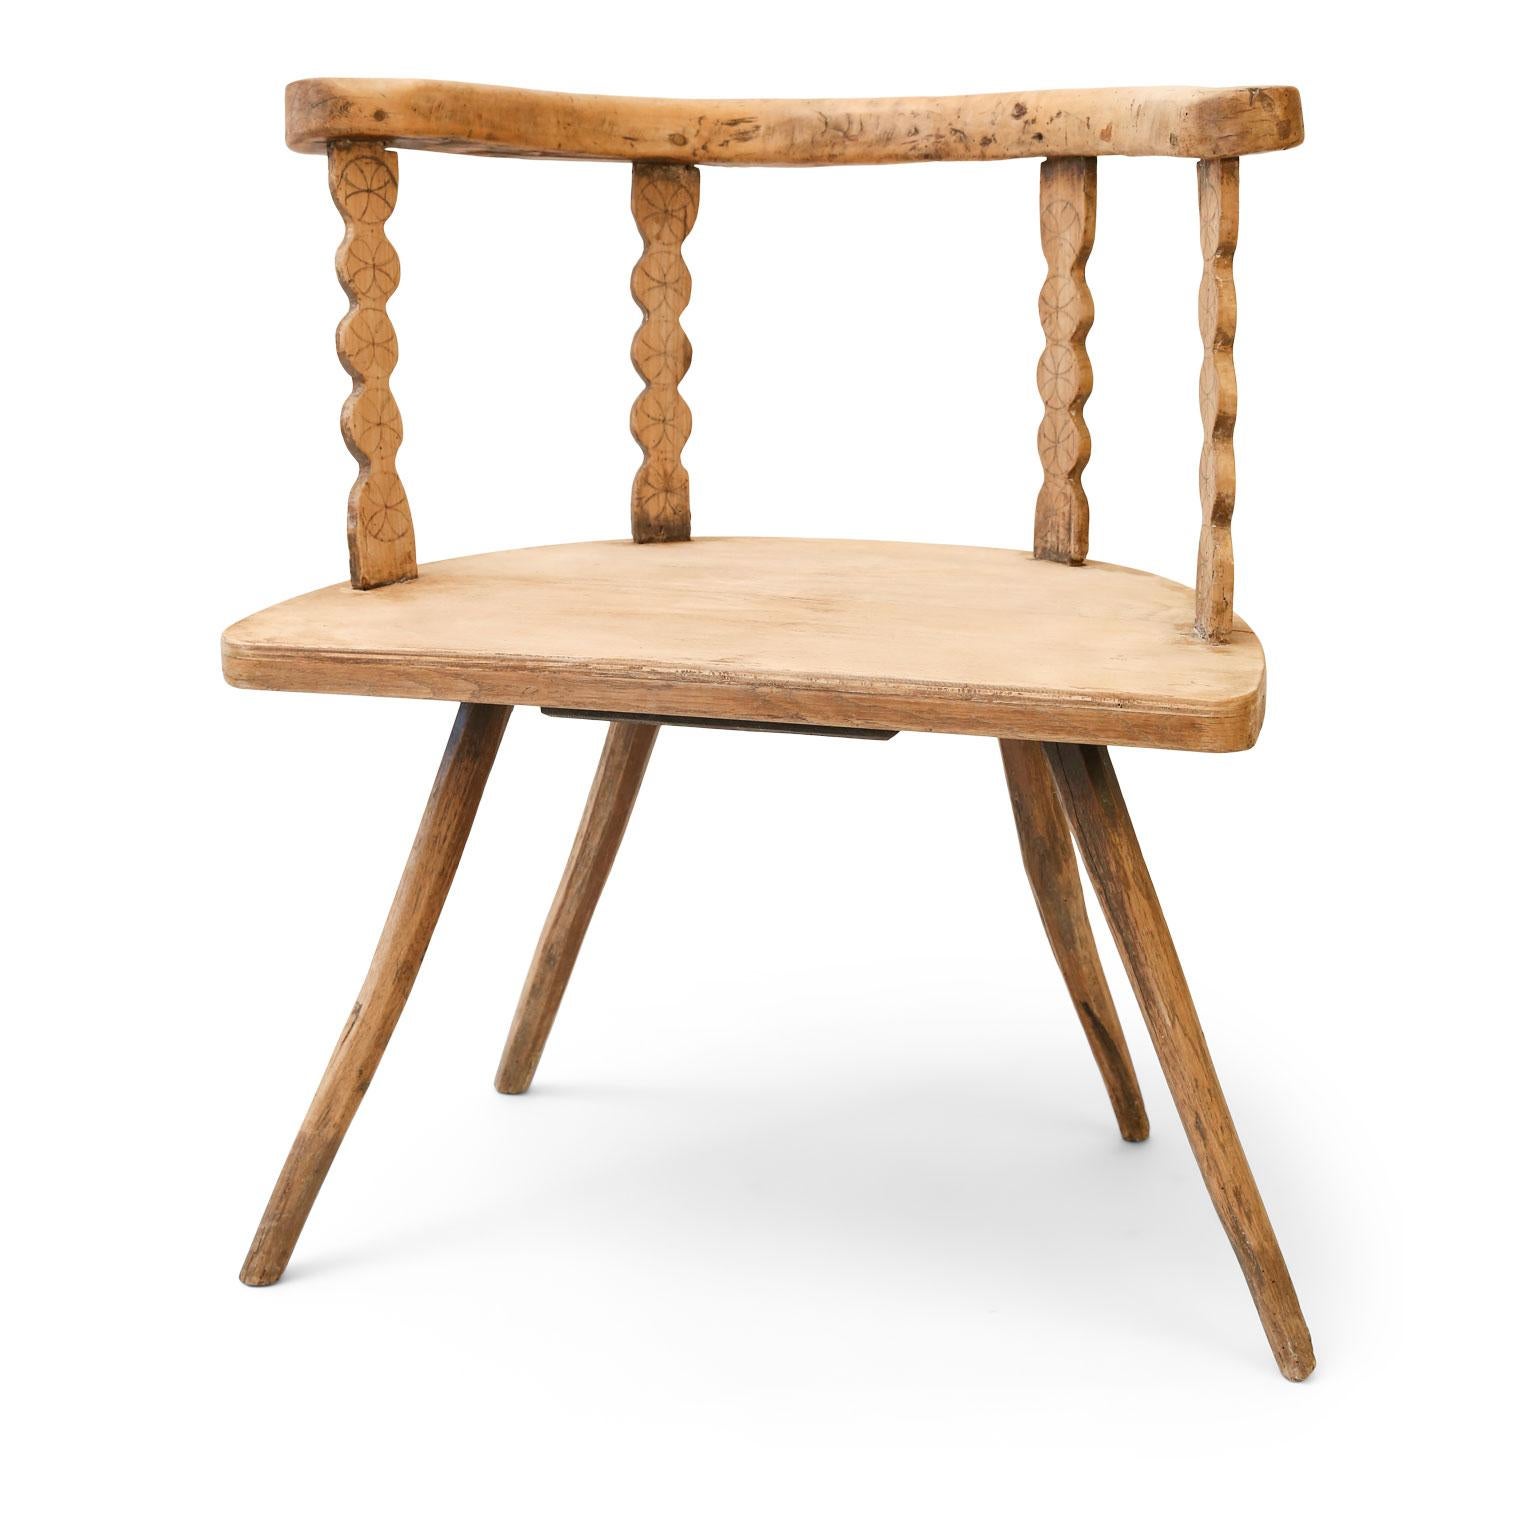 Swedish Vernacular Chair 1